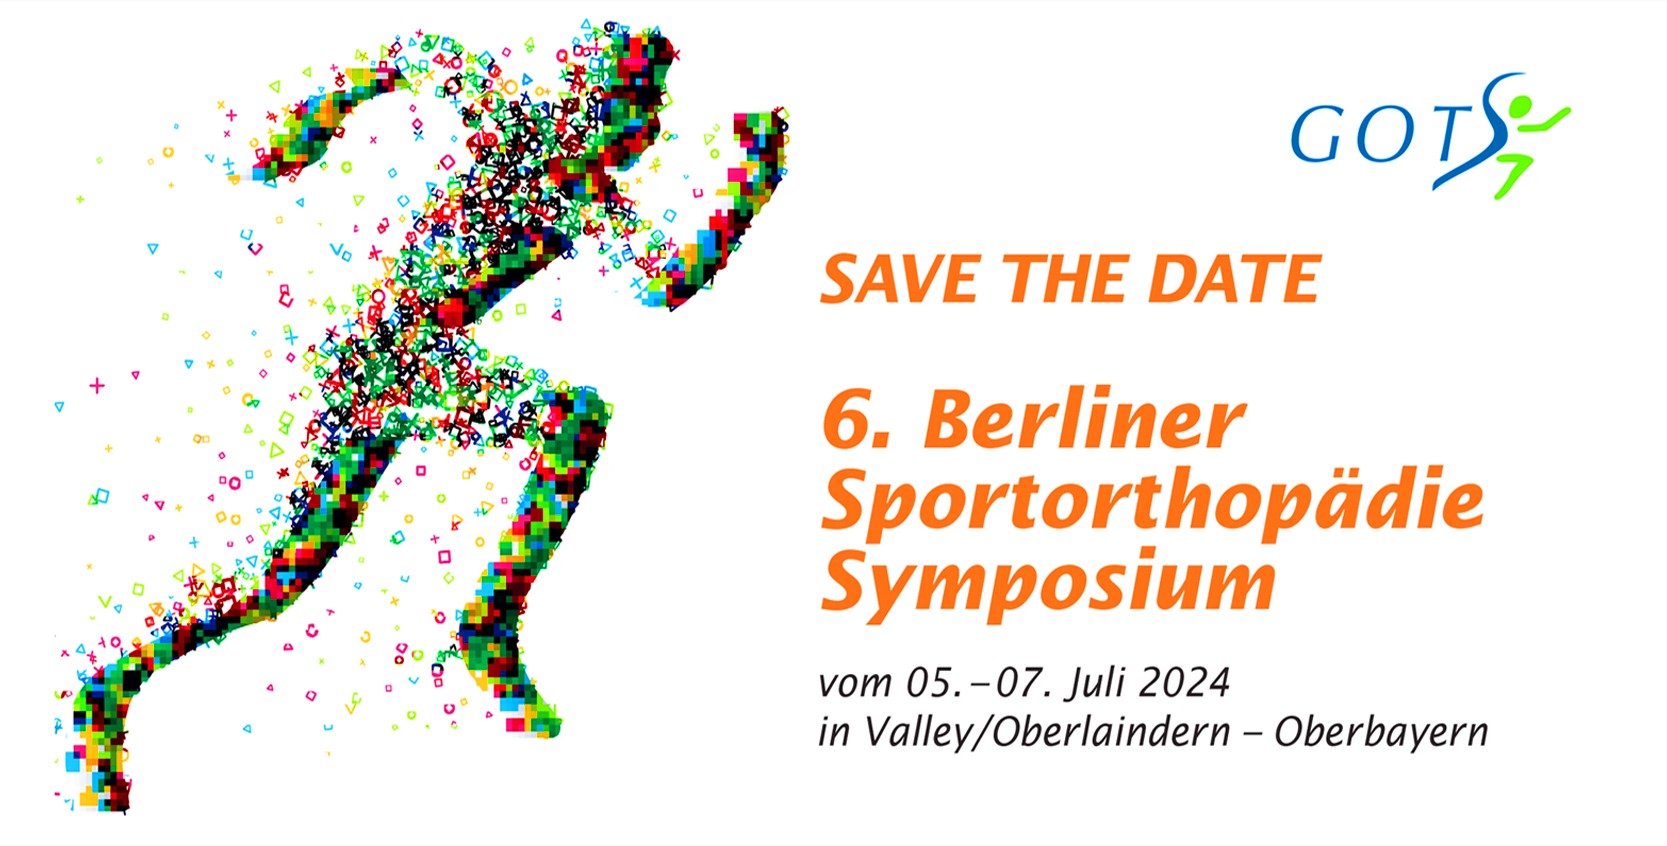 SAVE THE DATE
6. Berliner Sportorthopädie Symposium